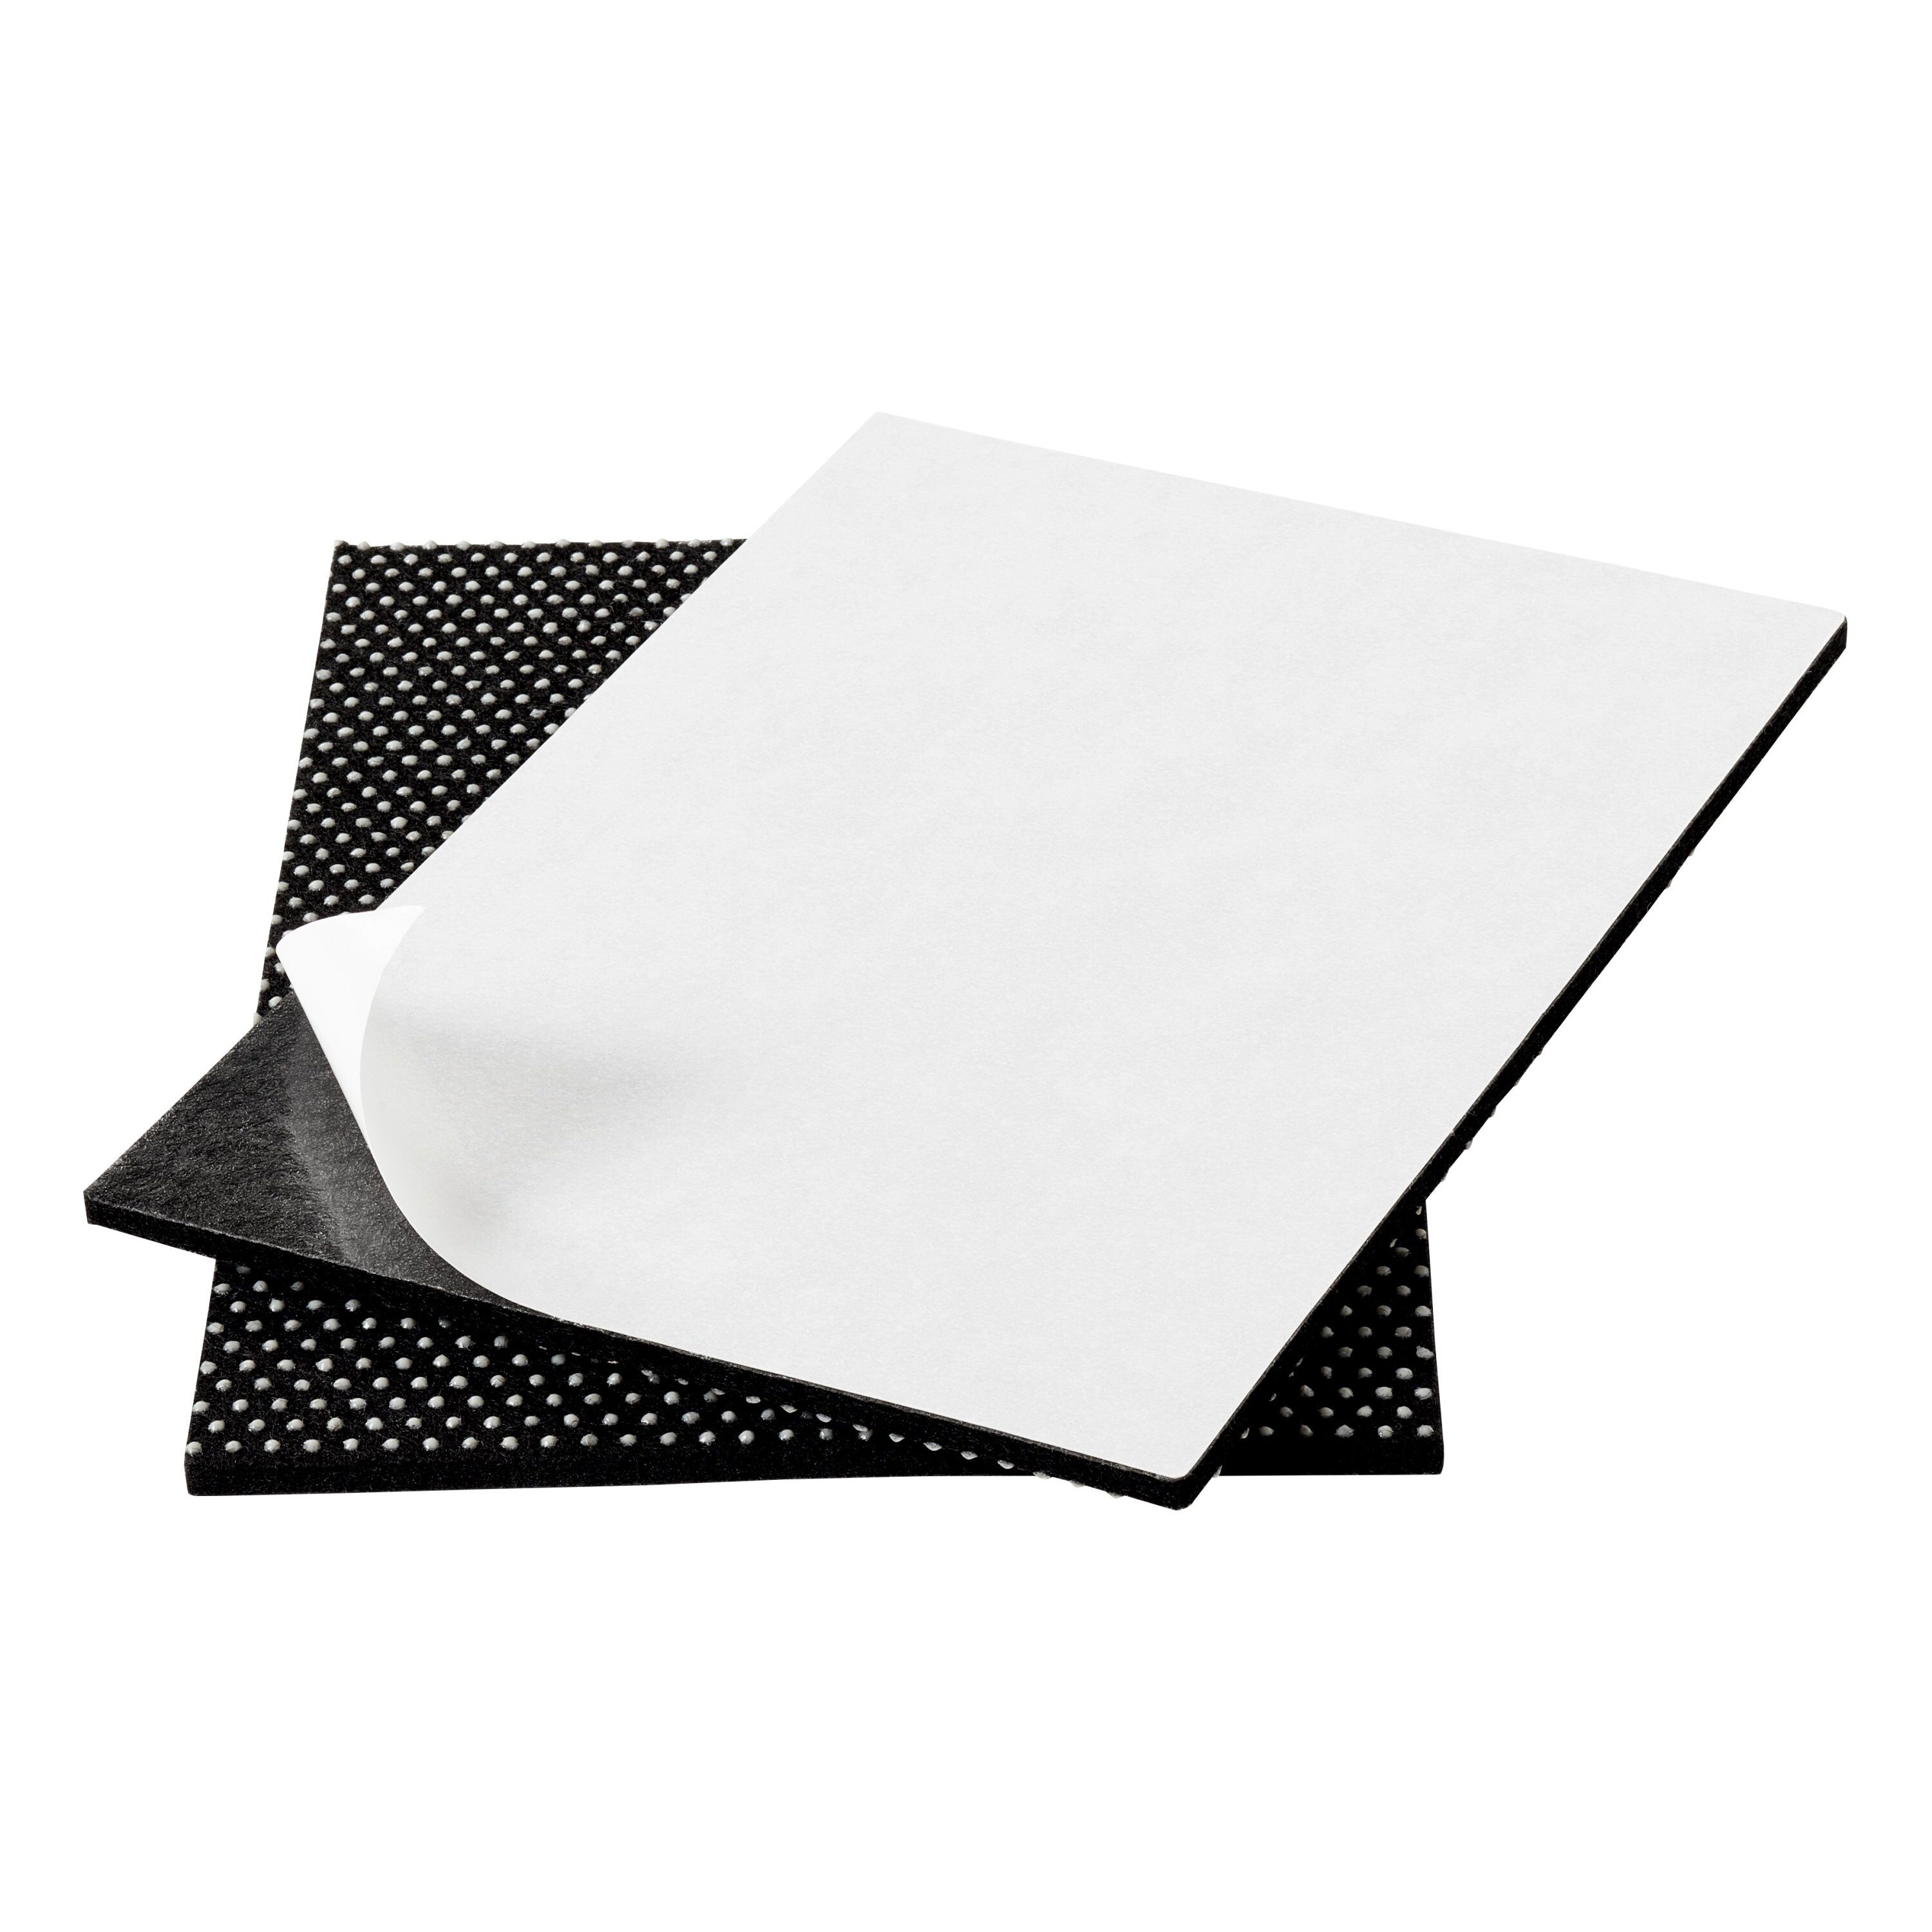 GRIP non-slip material / anti-slip material Lap Board - Black, 11 x 14